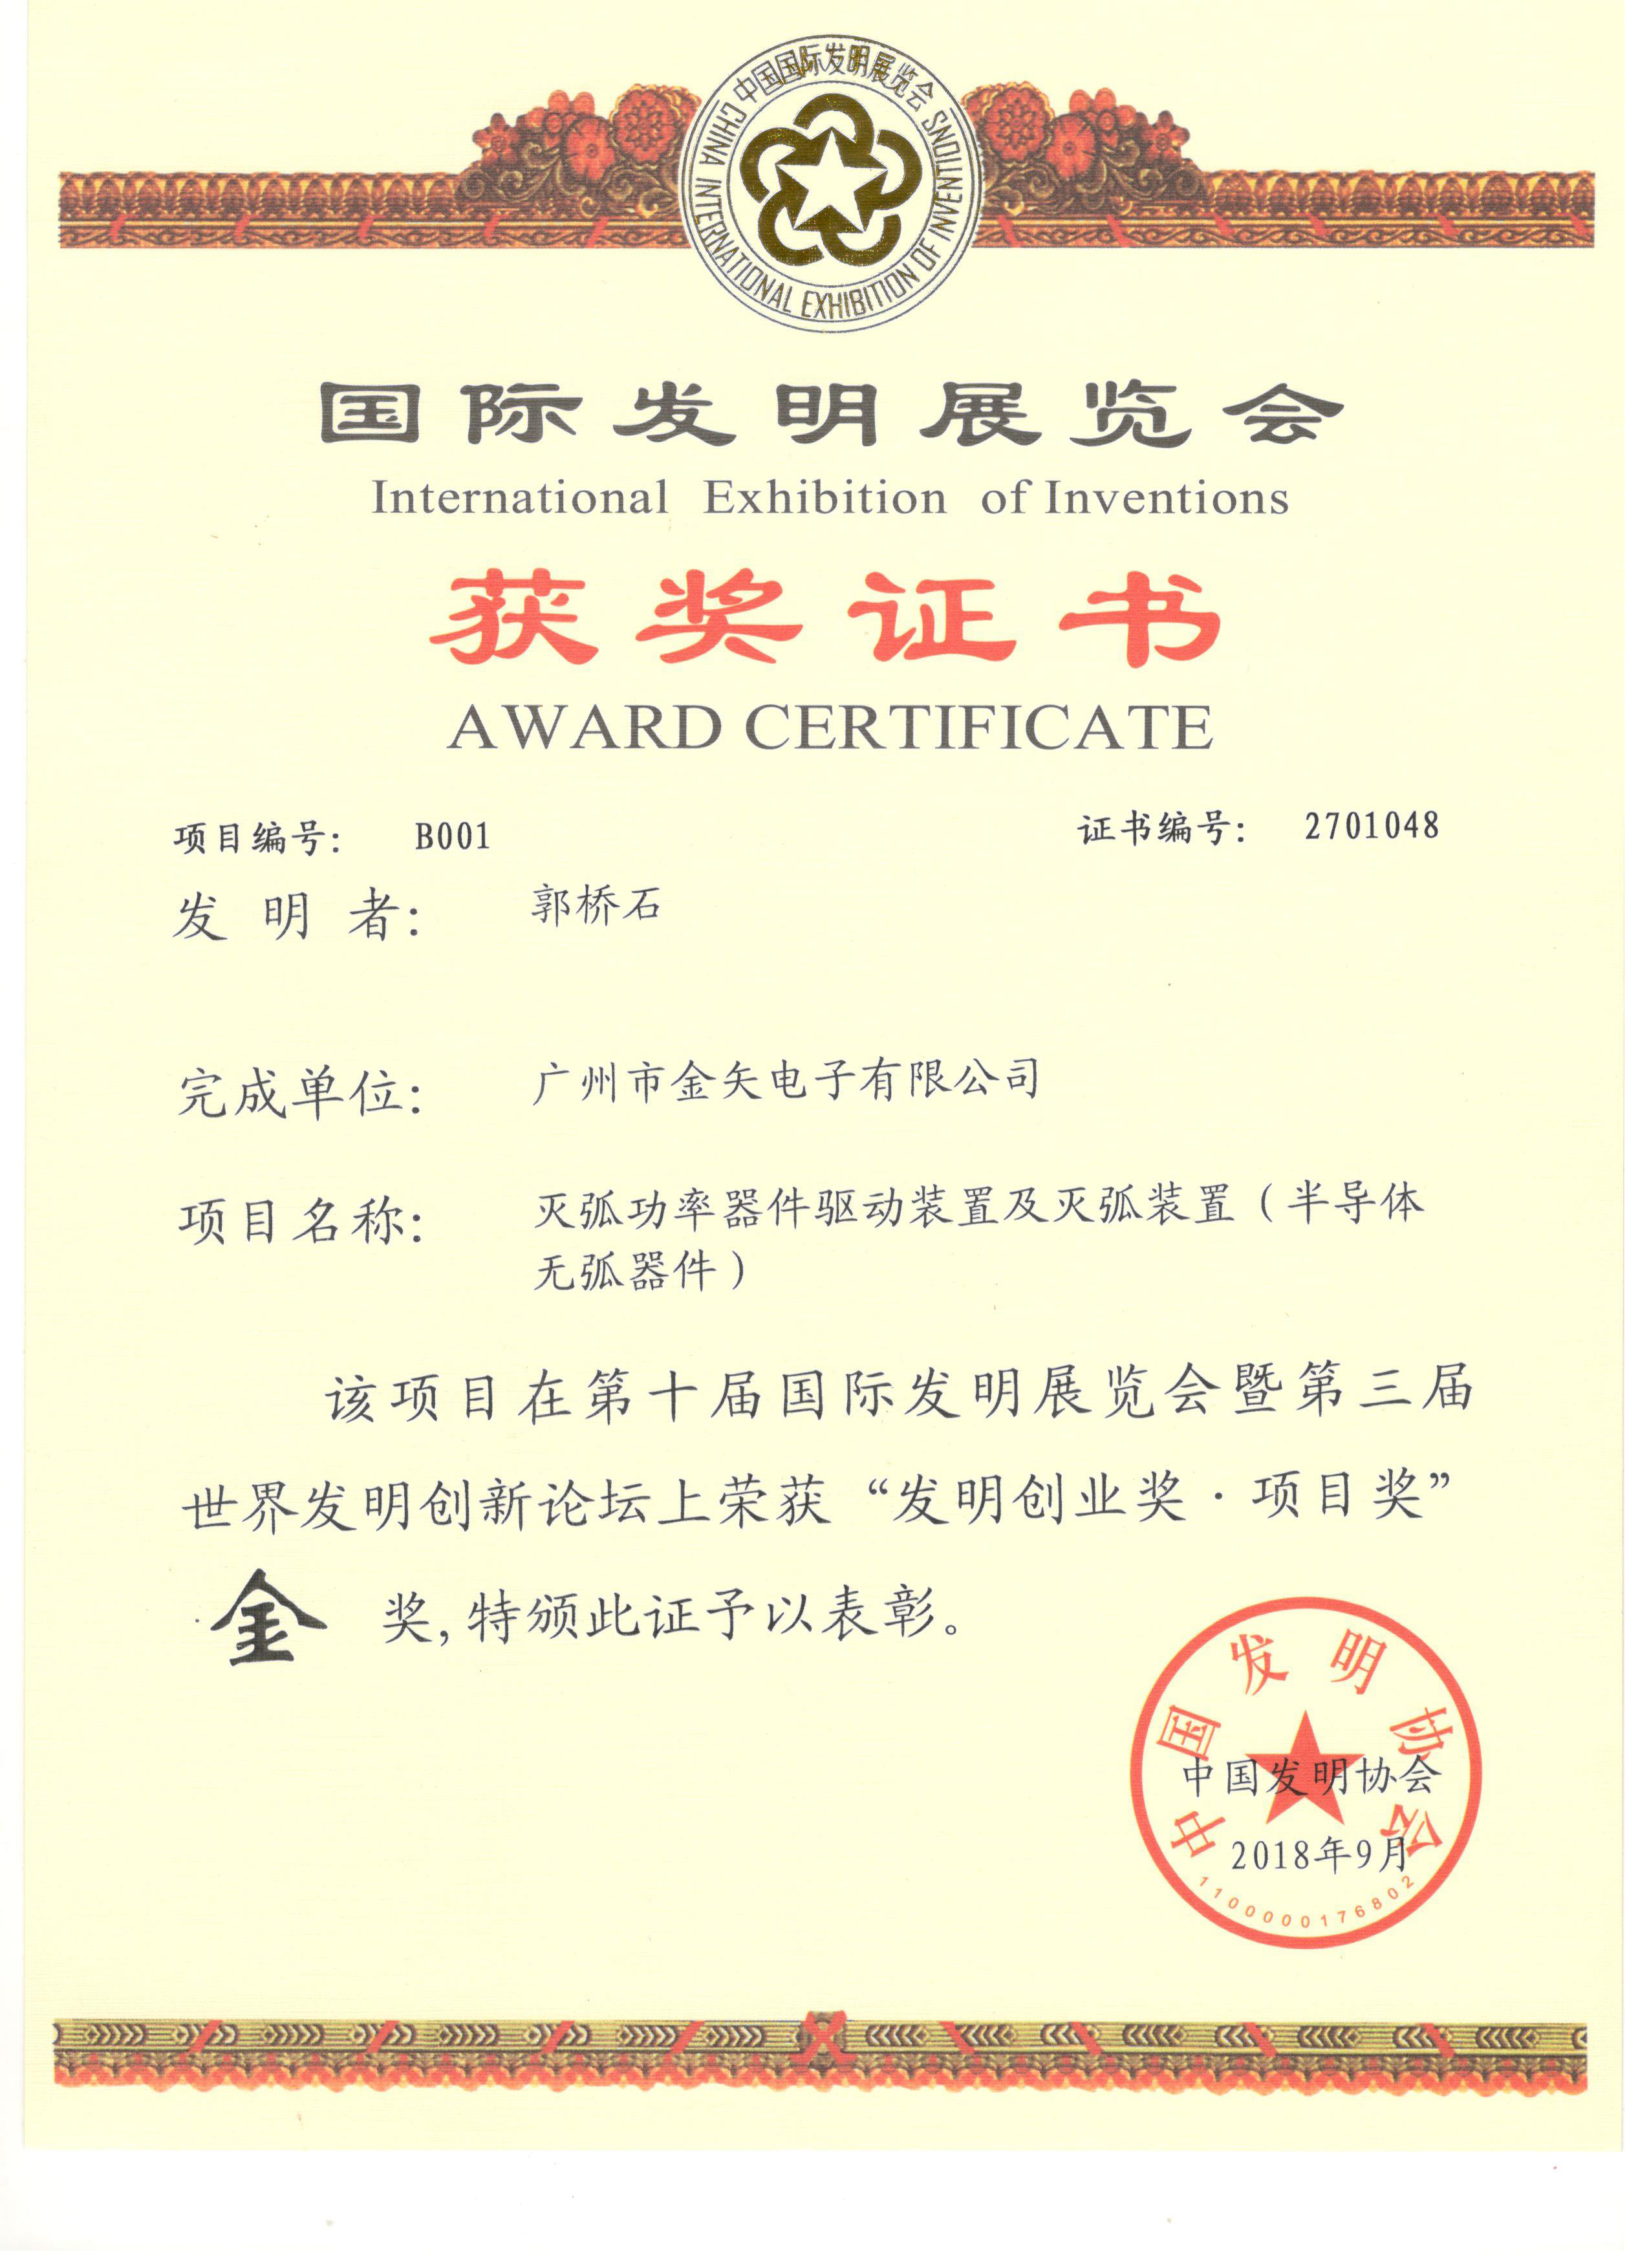 International Invention Exhibition Certificate